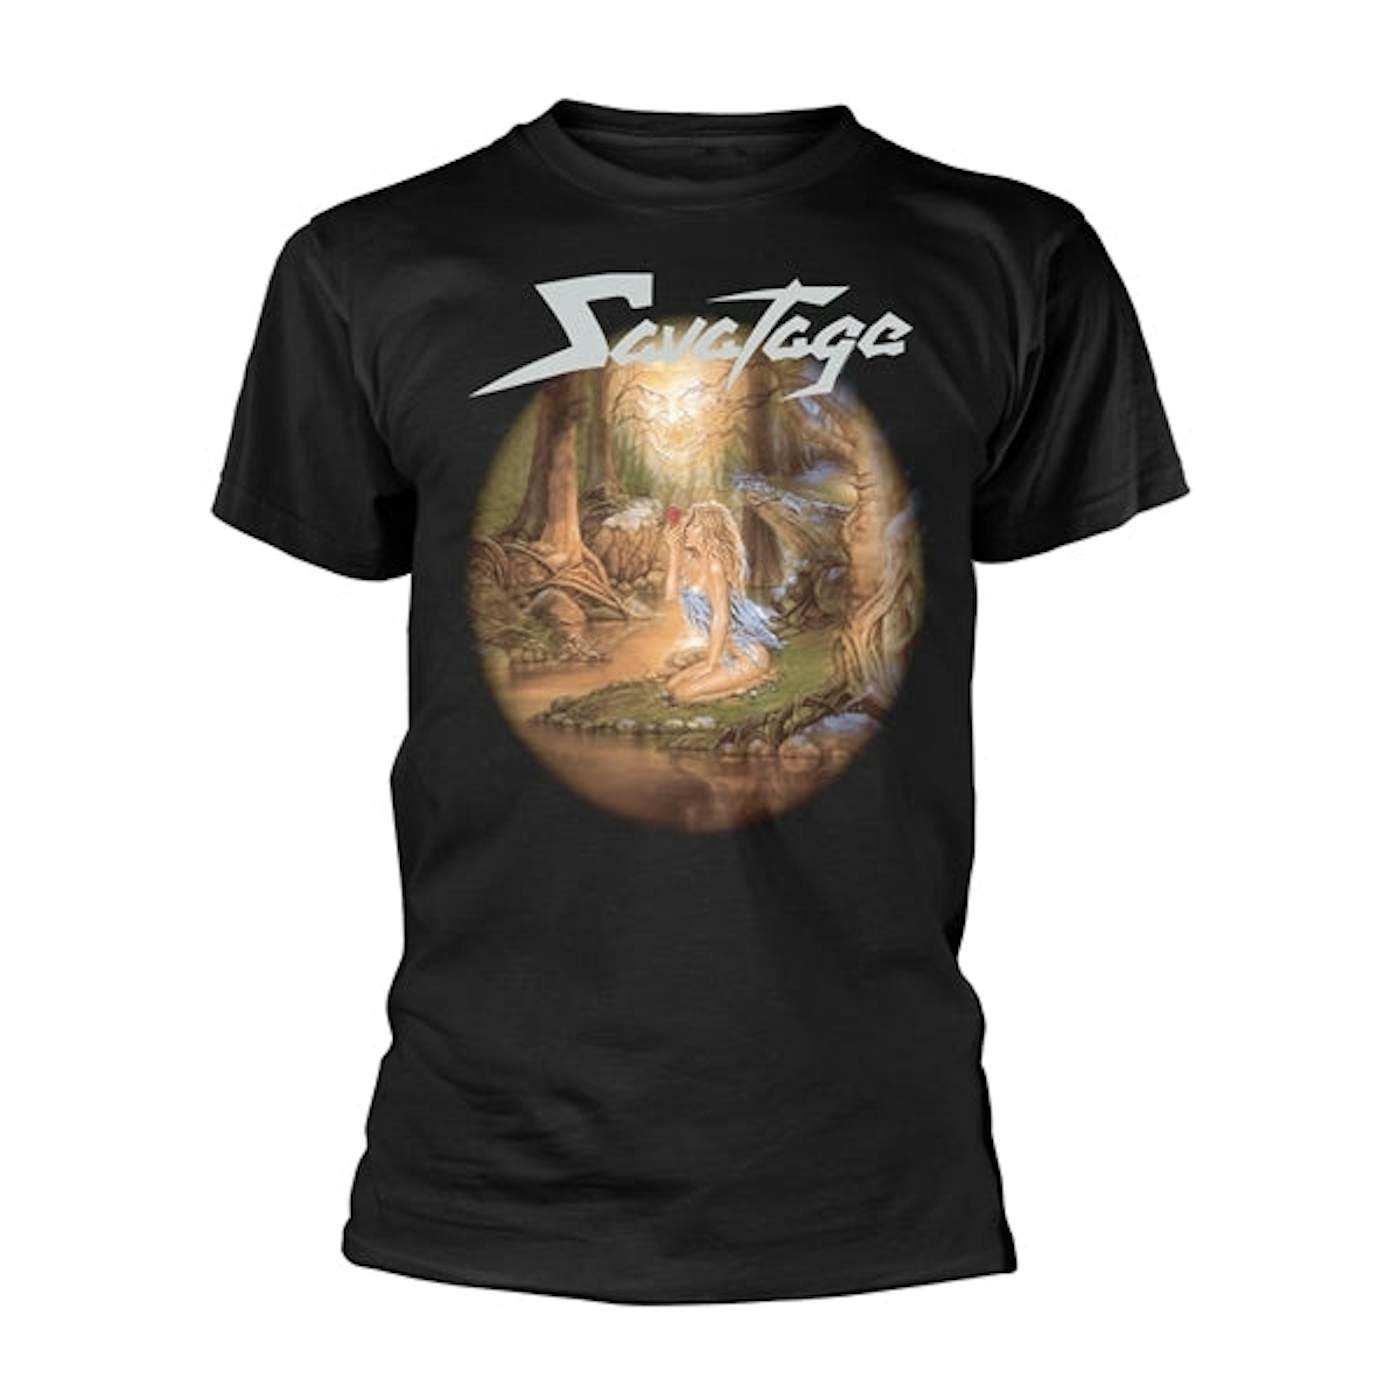 Savatage T Shirt - Edge Of Thorns